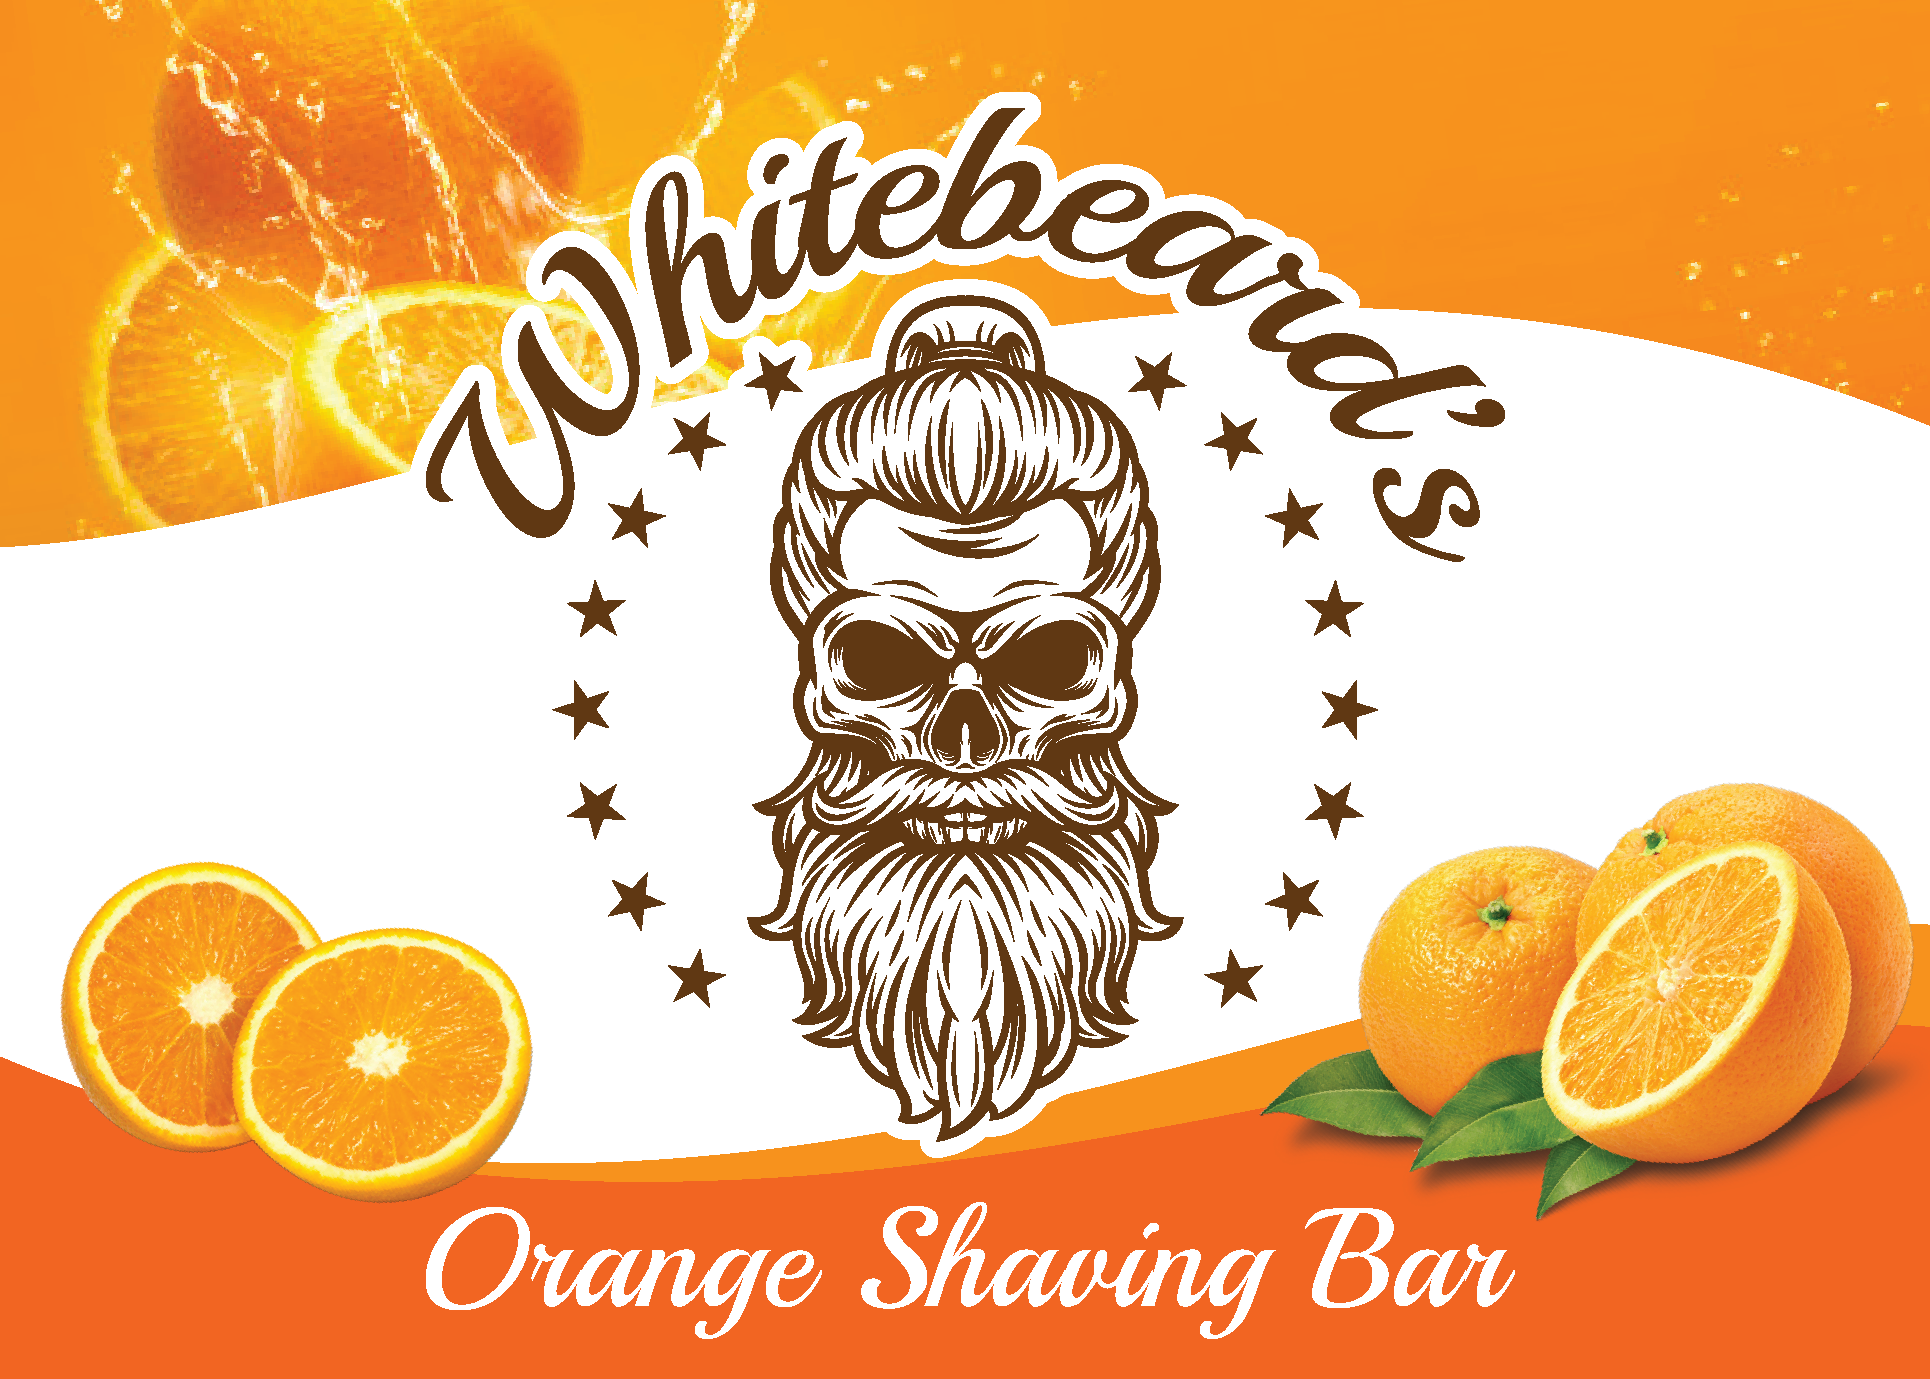 Whitebeard's Orange Shaving Cream Bar - Very Orange